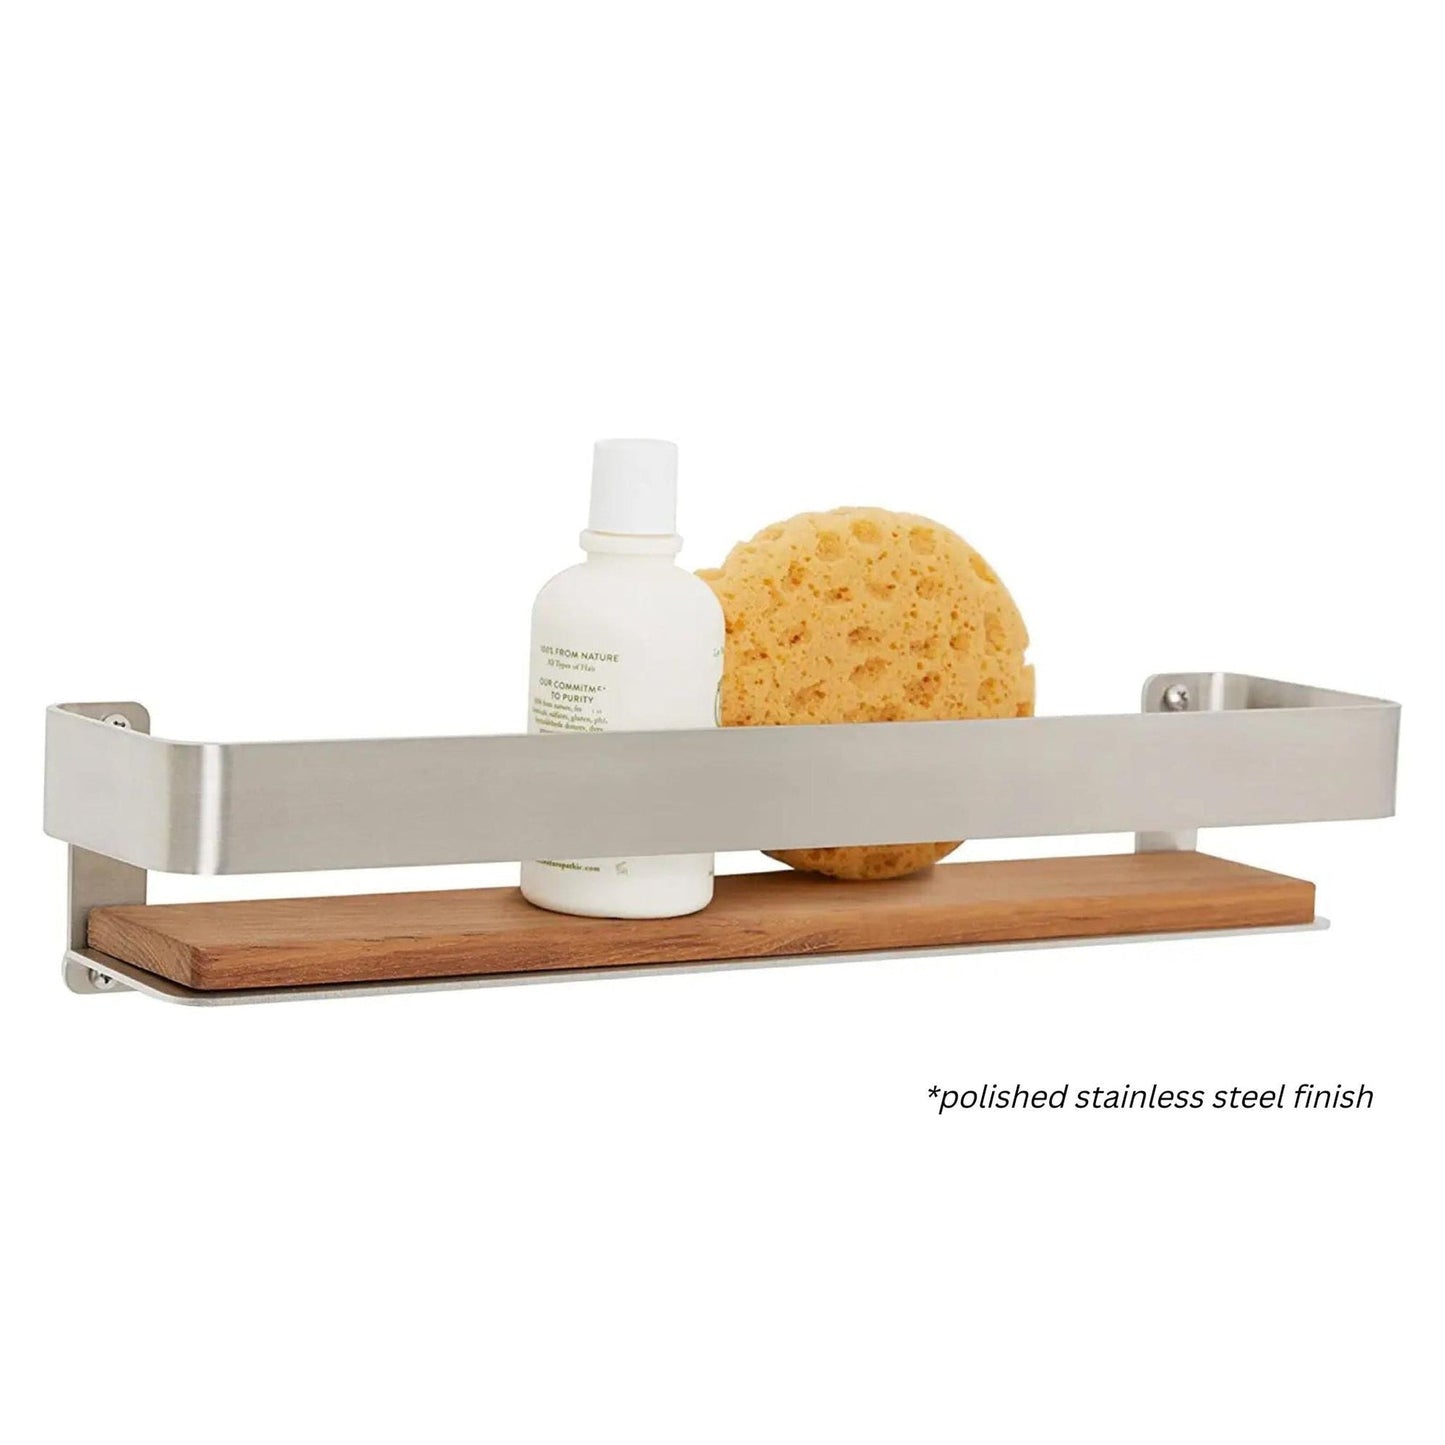 Seachrome Coronado 700 Series 18" x 4" Rectangular Shower Shelf With Rail in White Powder Coated Finish Stainless Steel and Natural Teak Wood Insert